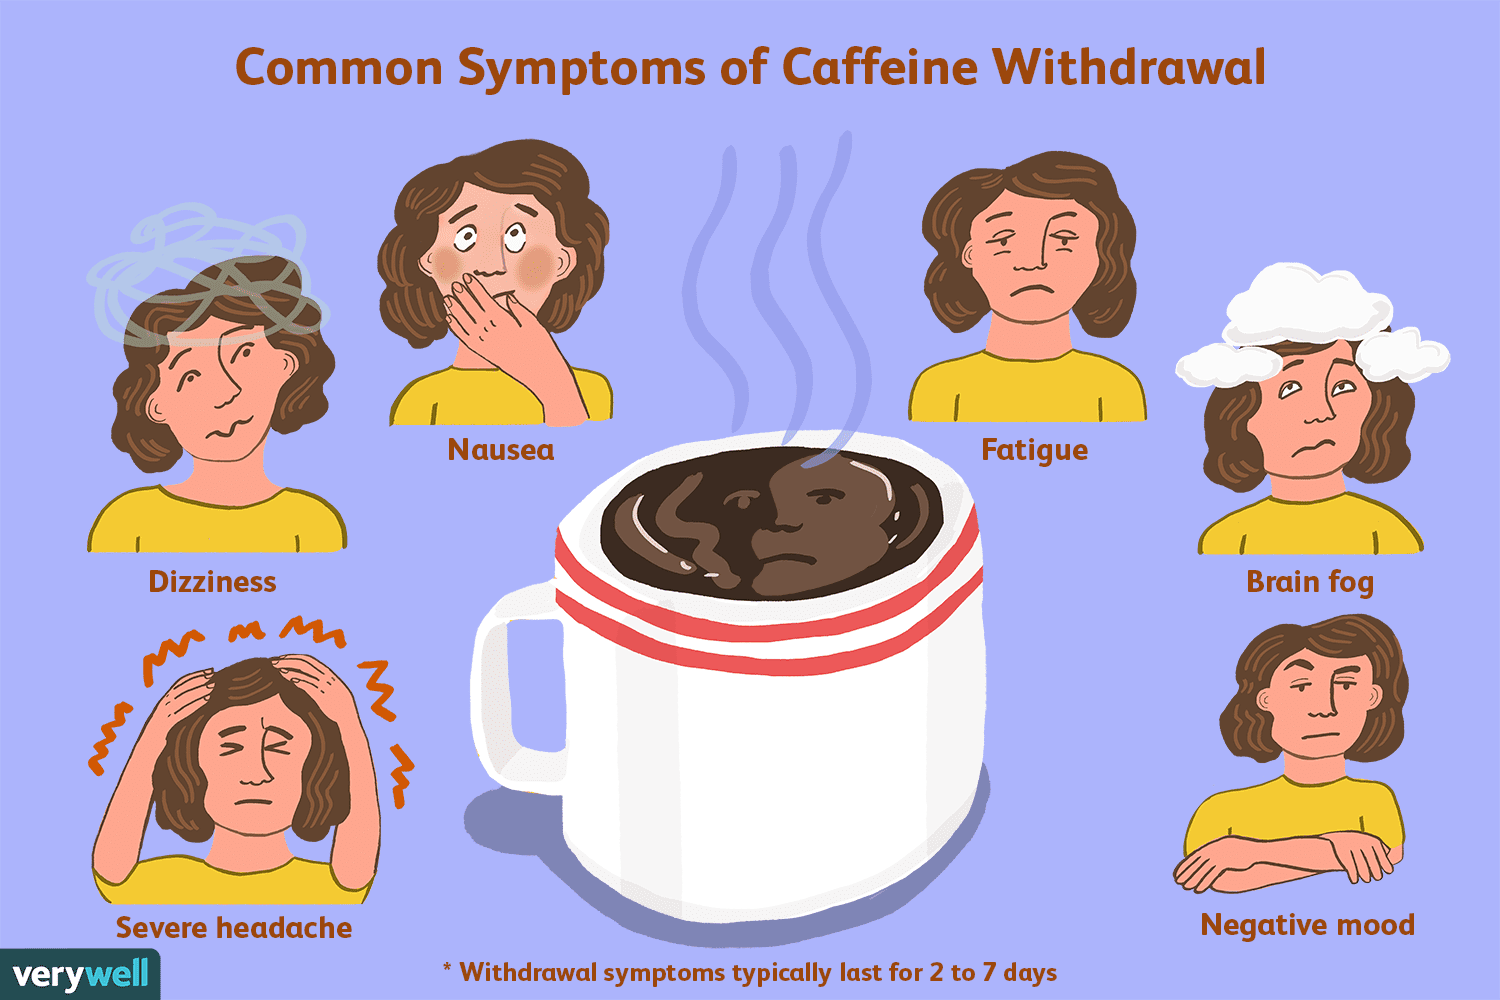 Can Caffeine Withdrawal Cause Flu Like Symptoms?